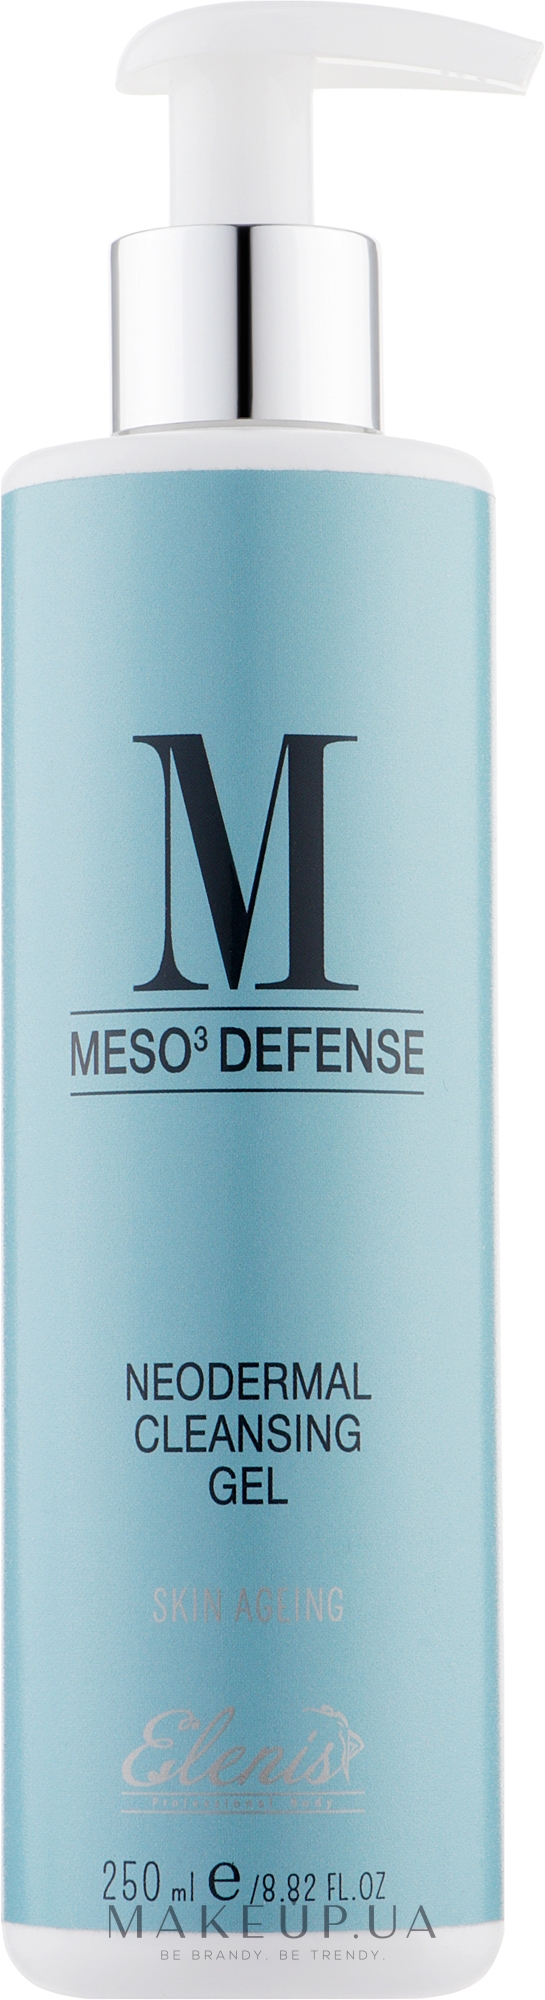 Неодермальний очищающий гель - Elenis Meso Defense Neodermal Cleansing Gel — фото 250ml